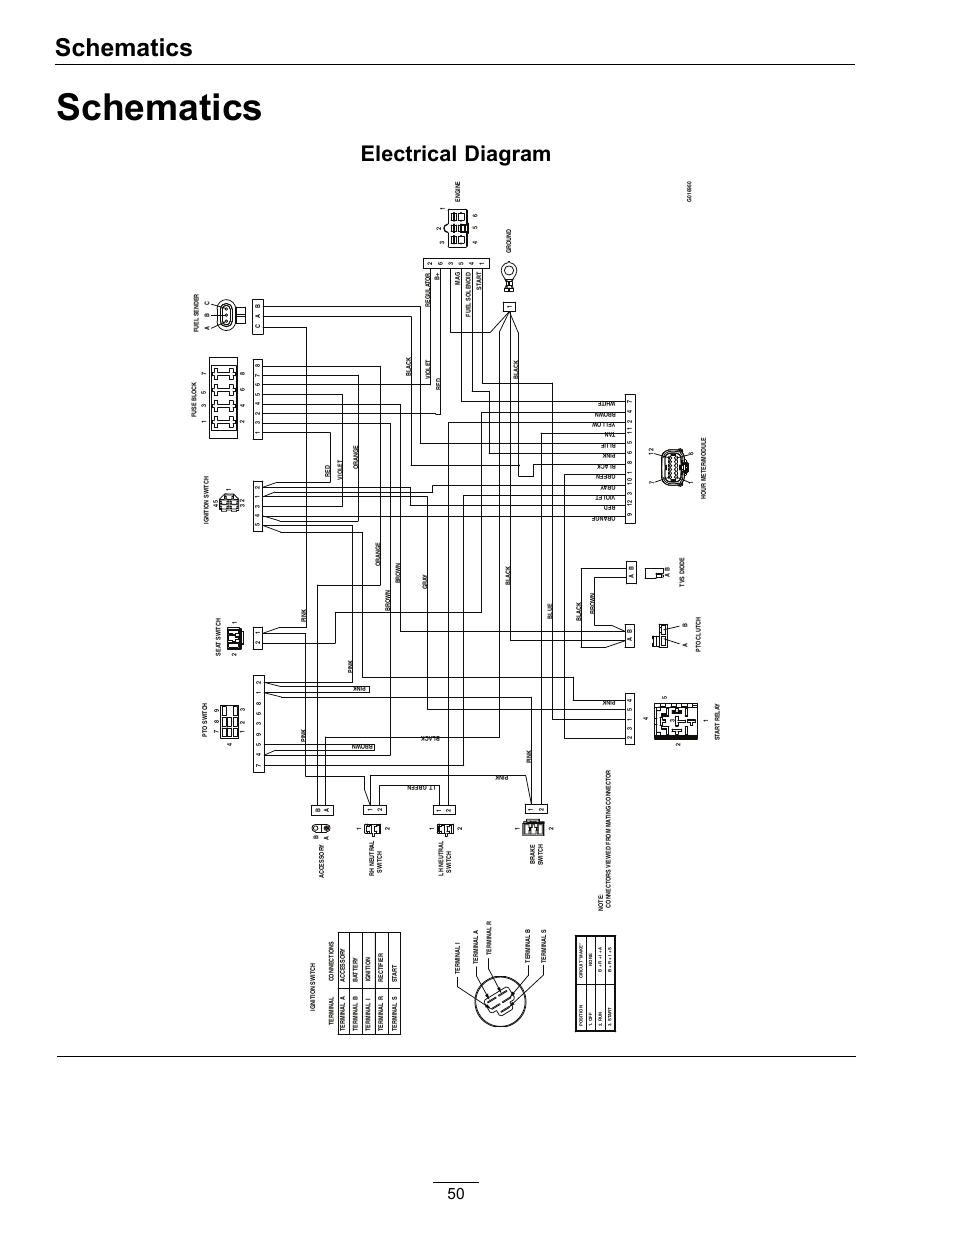 john deere 2440 wiring diagram